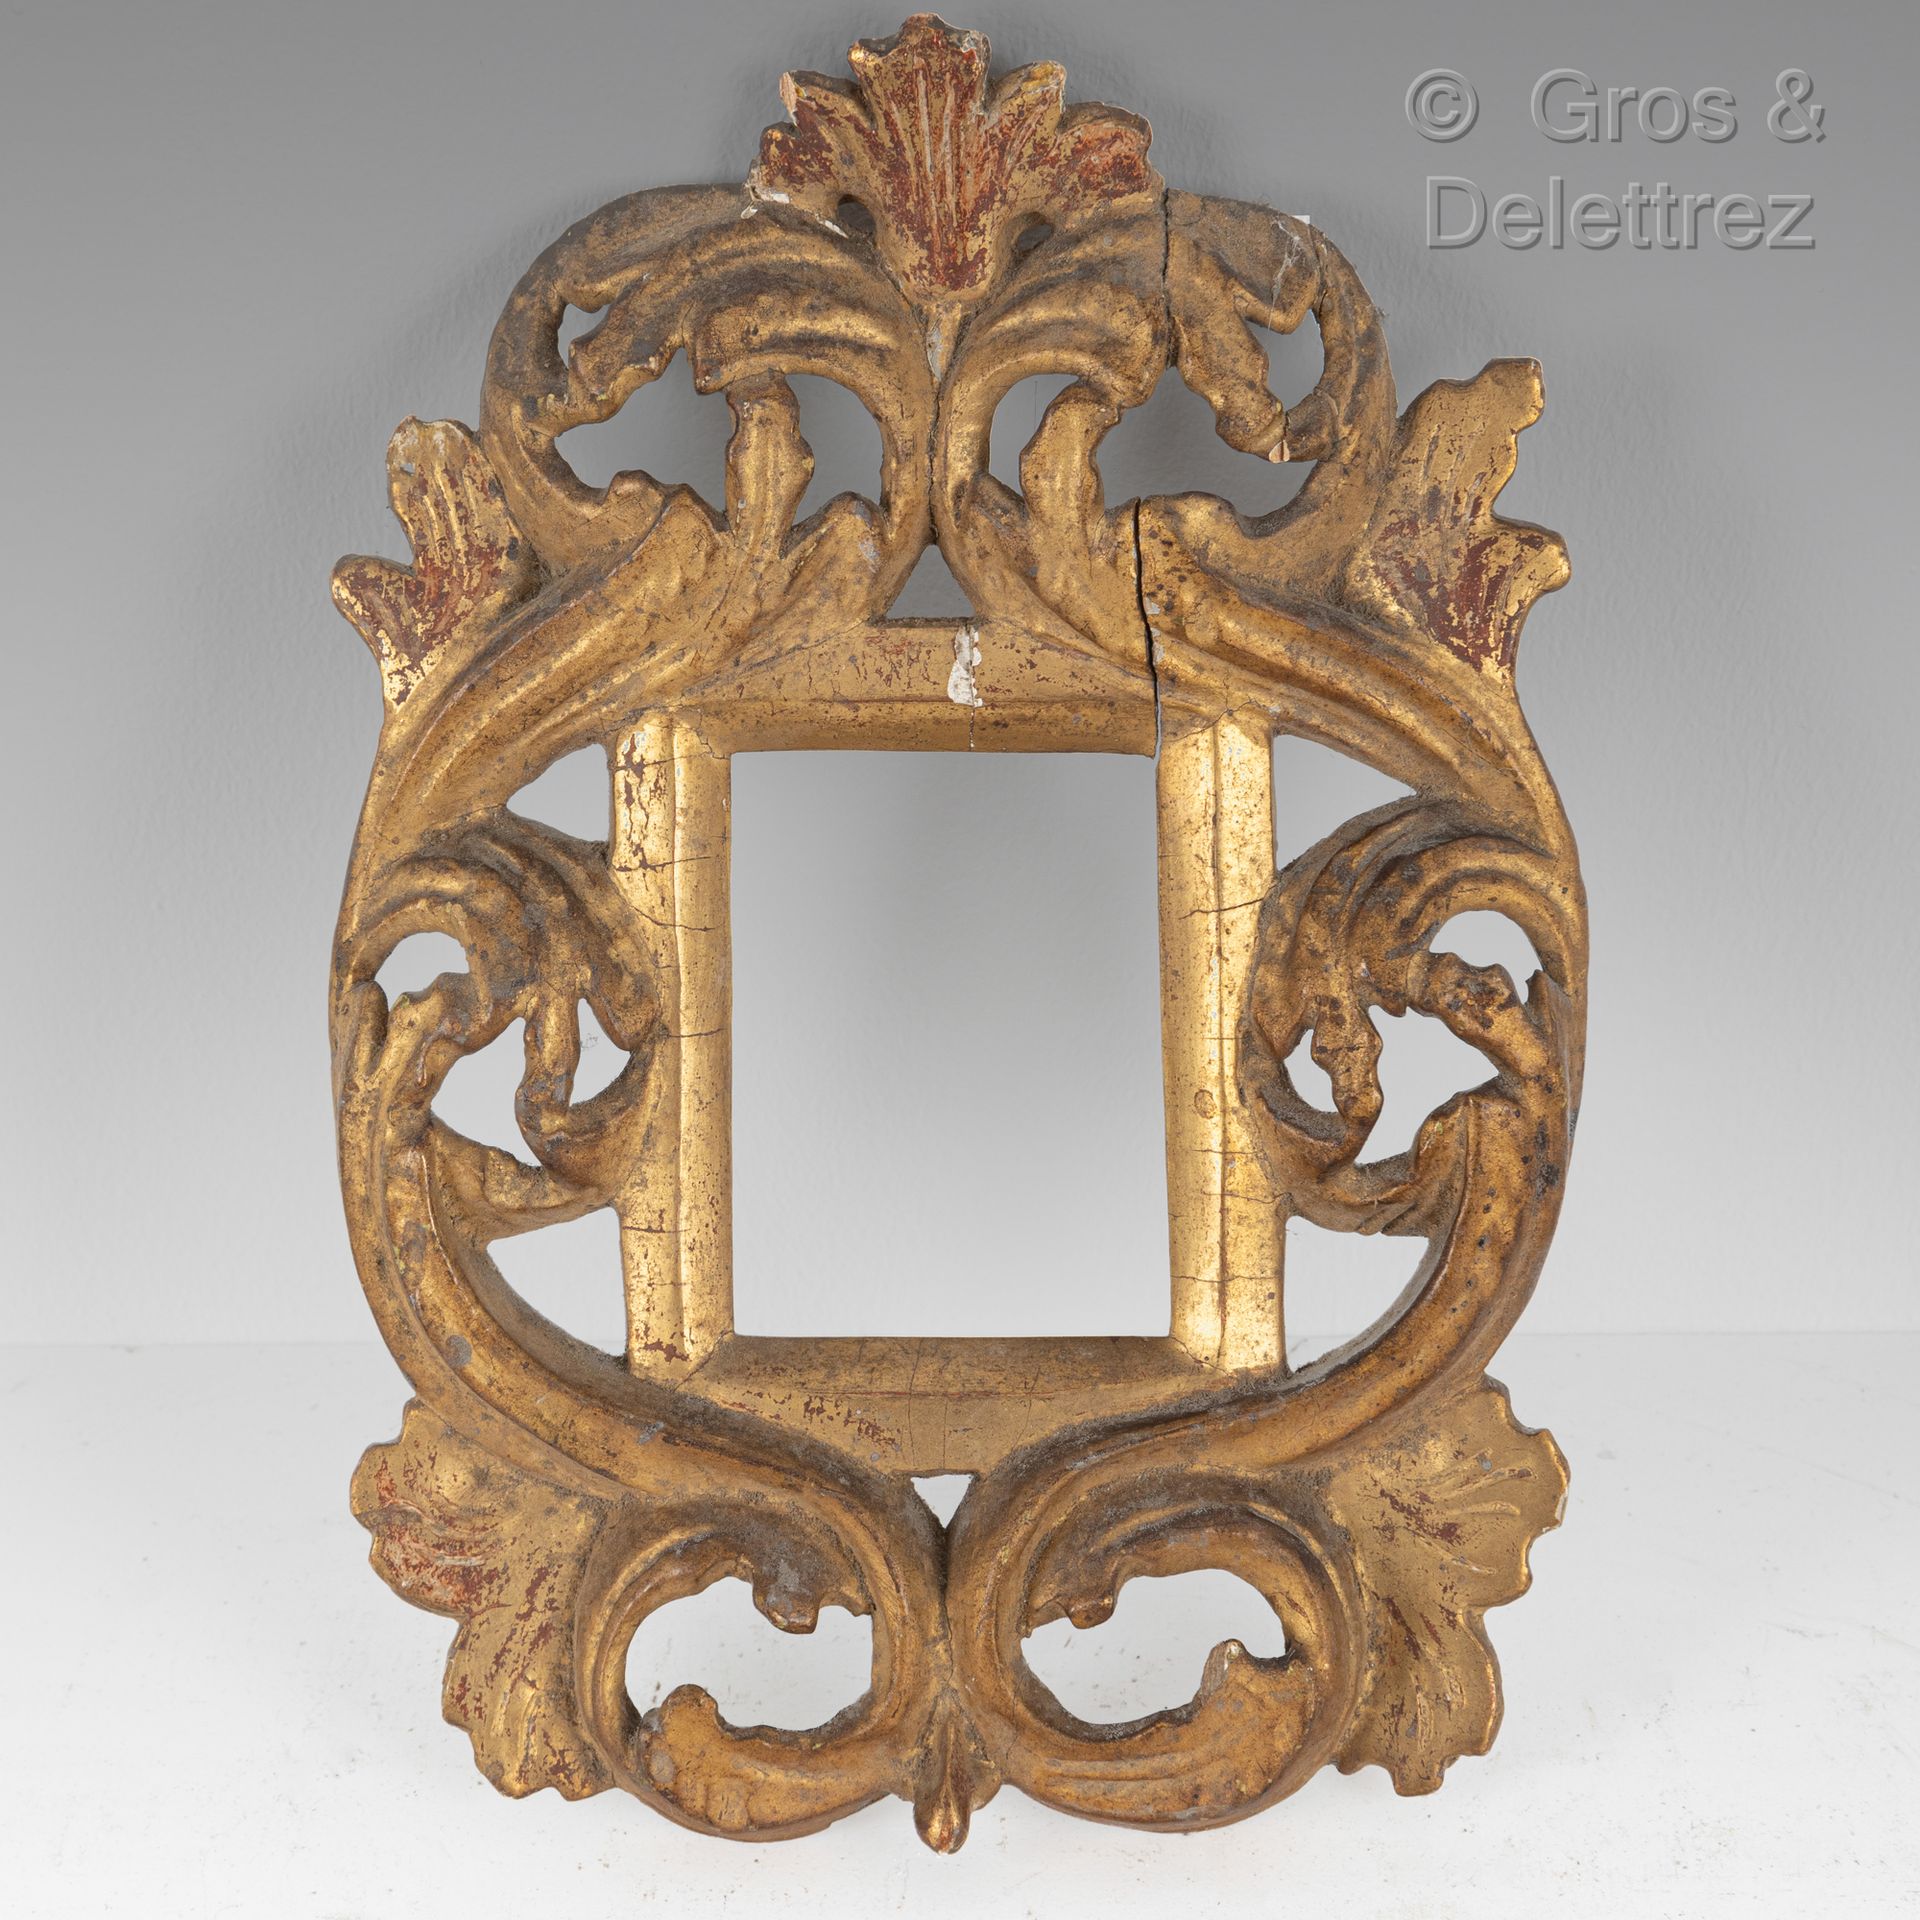 Null 雕刻着镂空叶子的木制单层框架。

意大利，18世纪

6 x 4,7 cm。